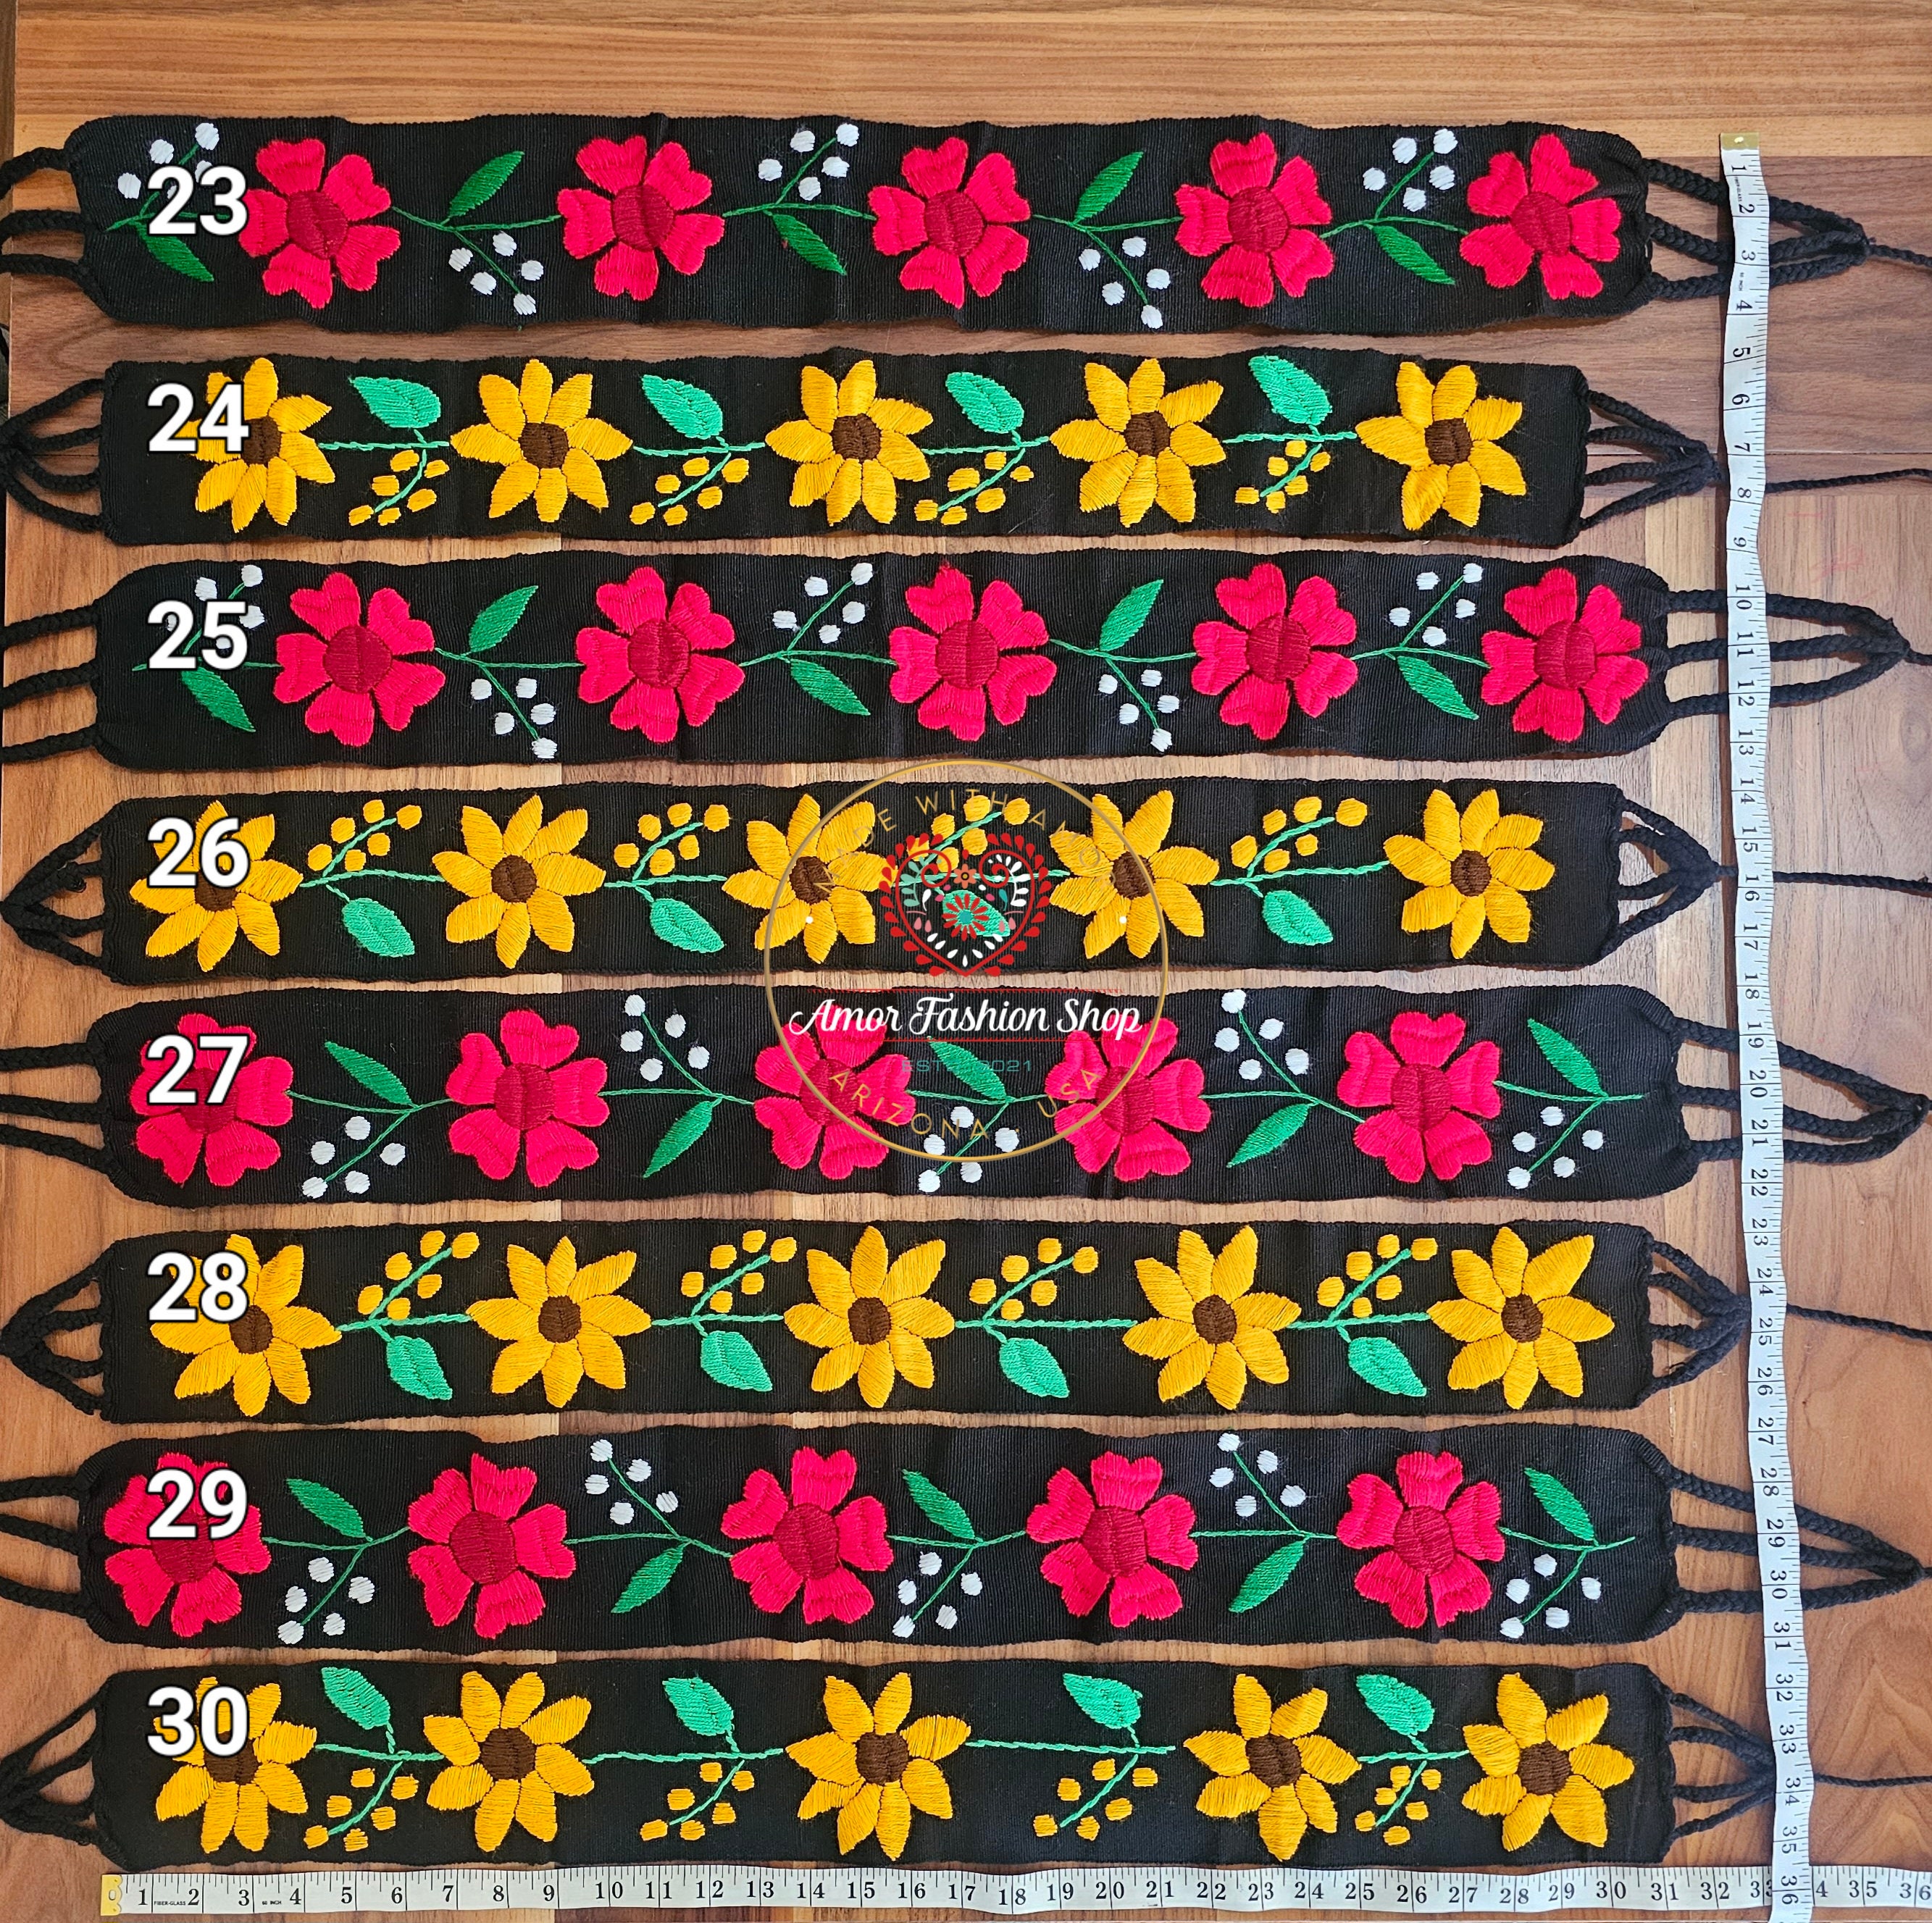 Gorgeous Black Belts Colorful Embroidered Flower Sash - Cintos / Fajos Mexicanos Negros Bordados a Mano Negros con Colores Artesanales